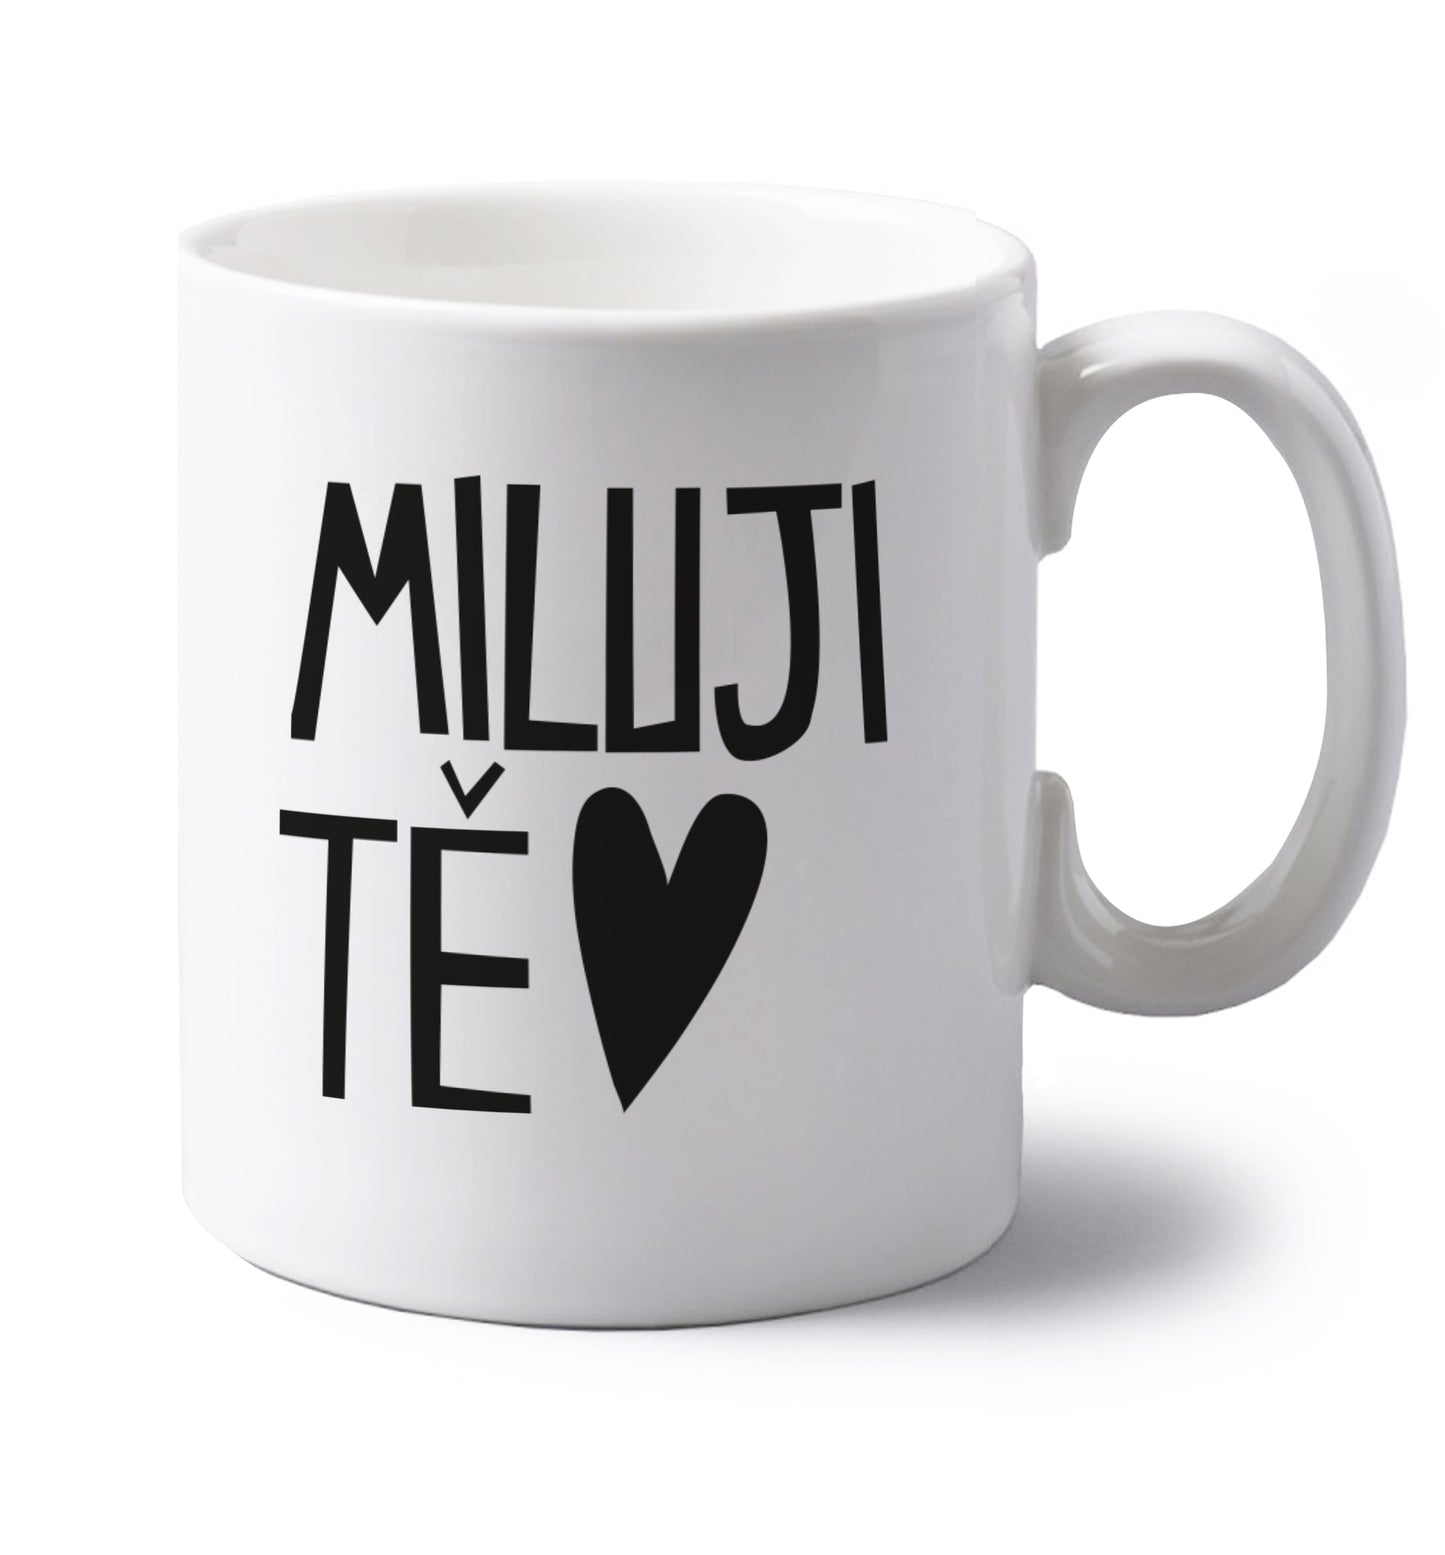 Miluji T_ - I love you left handed white ceramic mug 